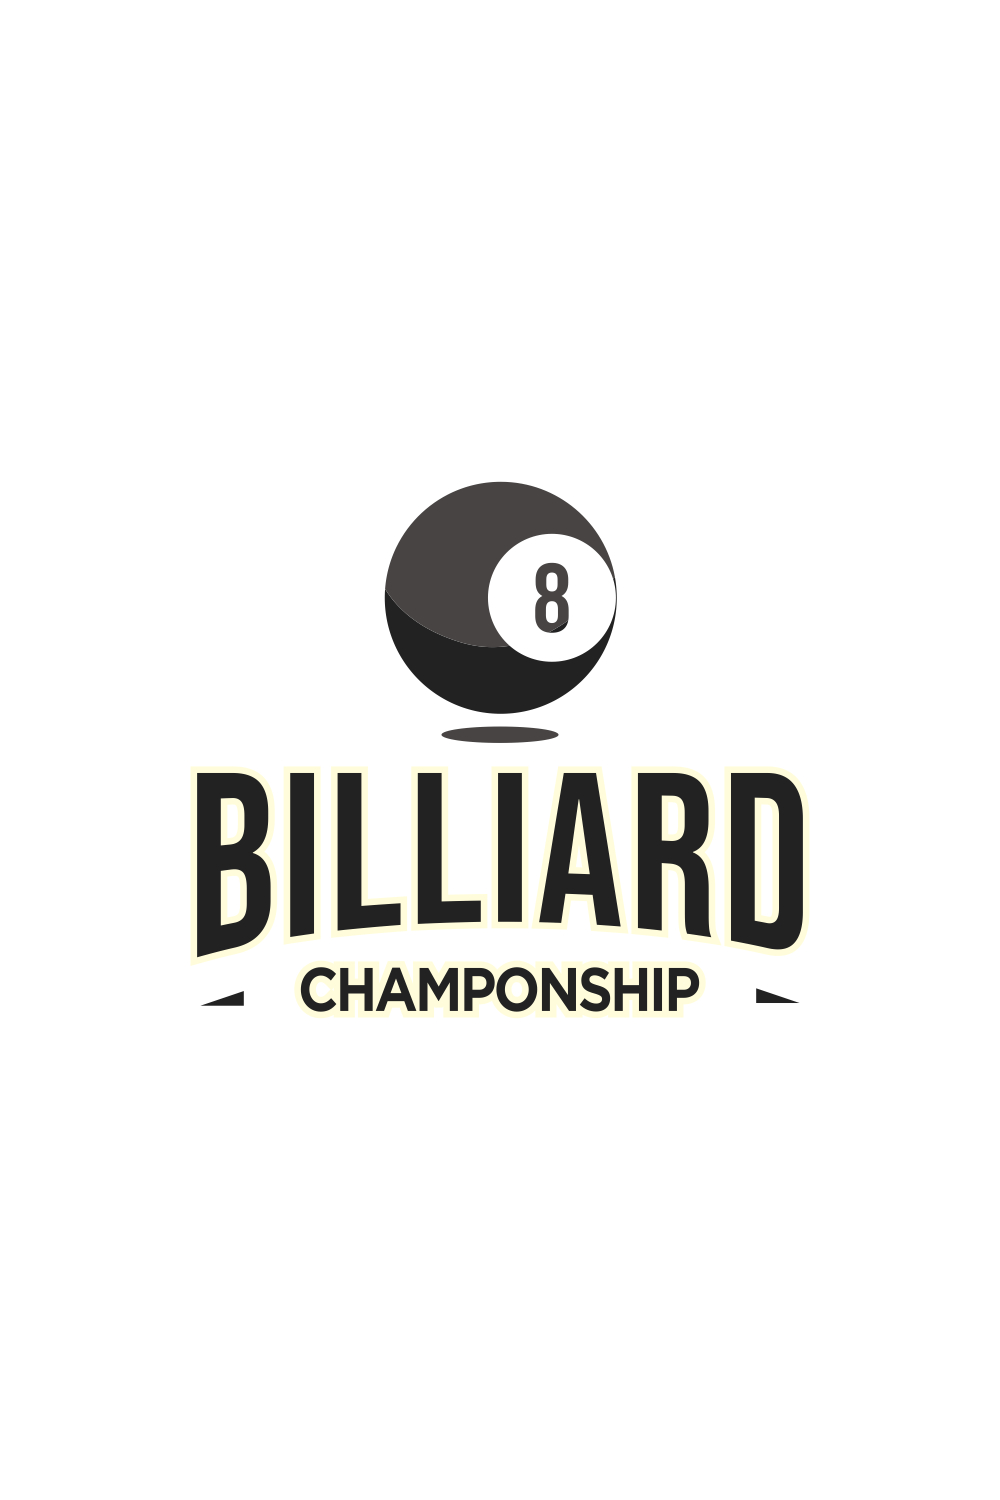 Billiards logo, Sports label for billiards room, Billiards logo template pinterest preview image.